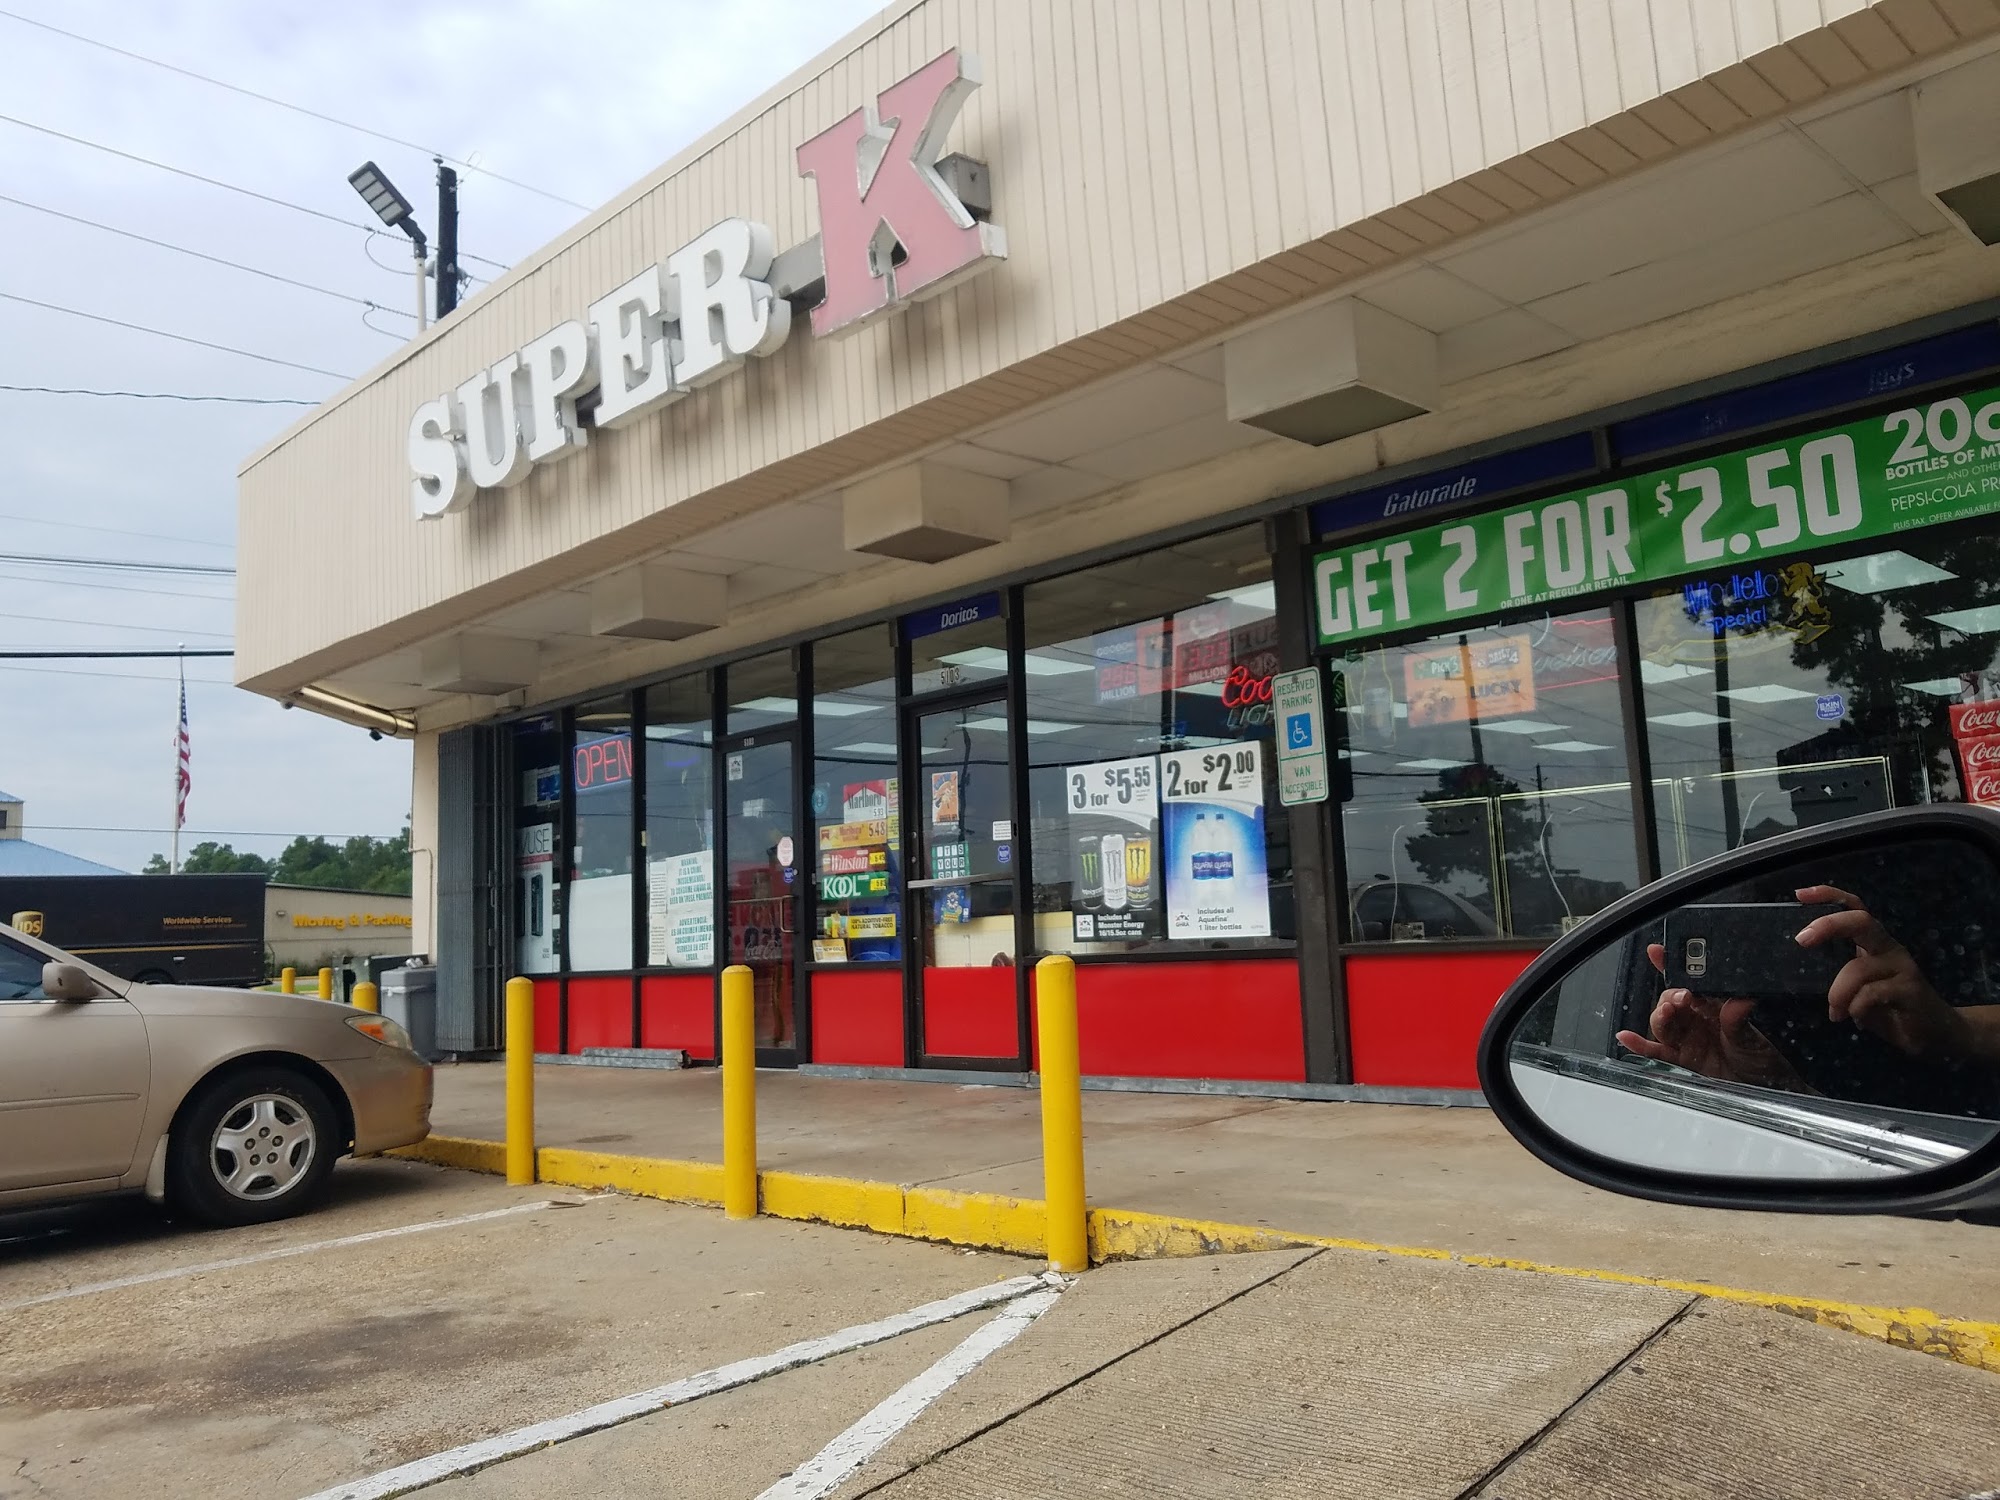 Super K Food Store